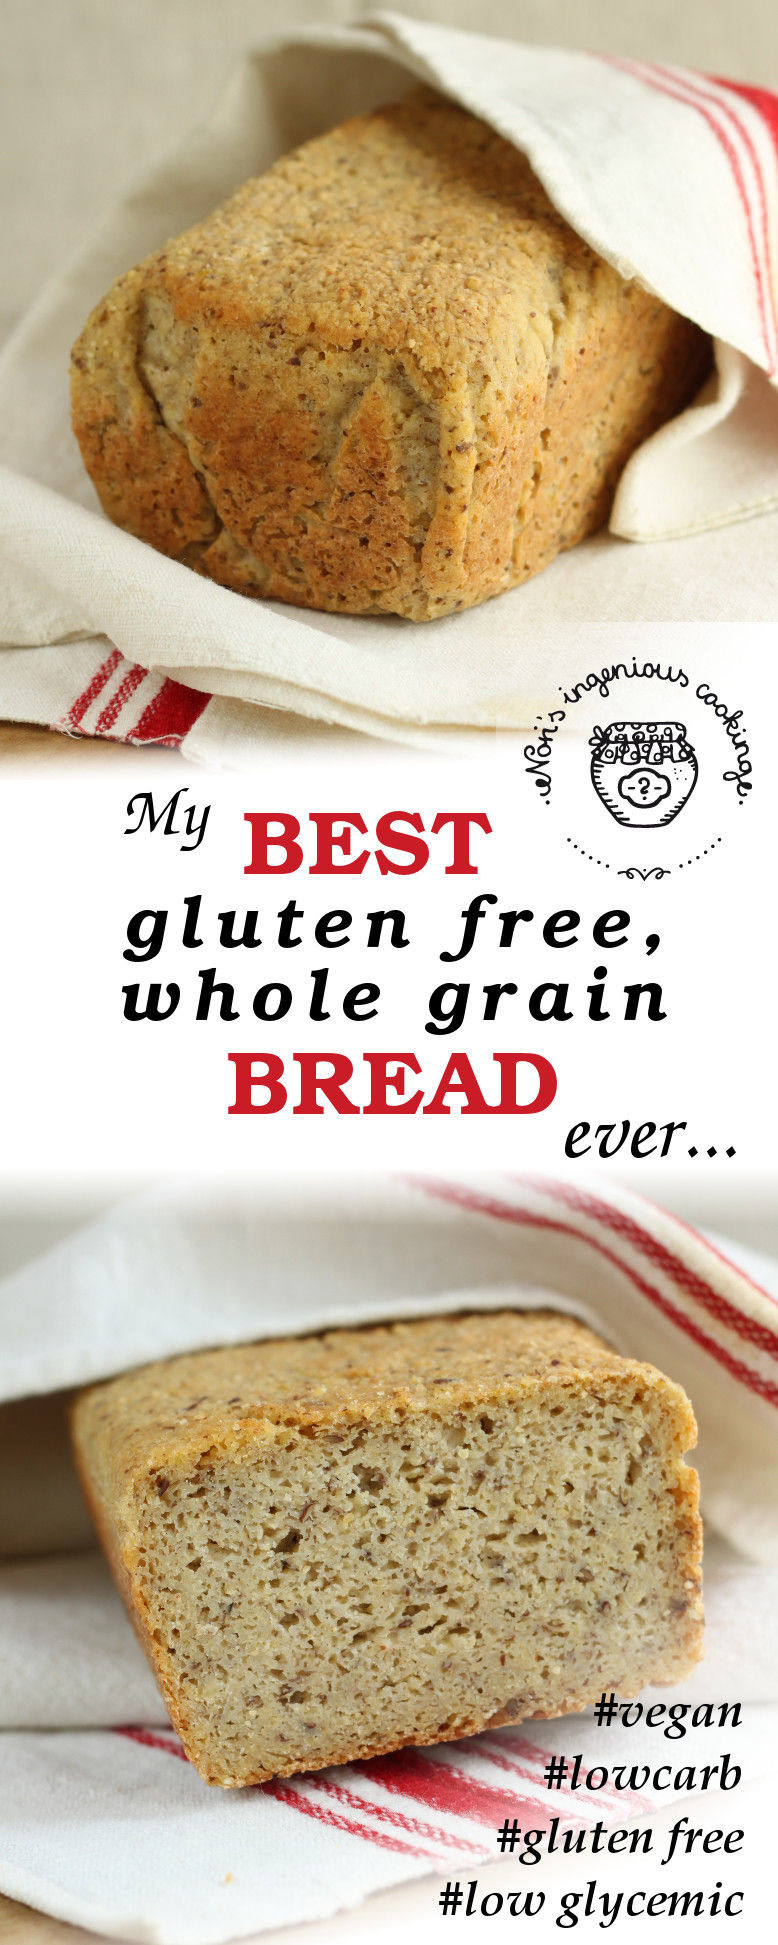 Grain Free Vegan Recipes
 My best gluten free whole grain bread ever vegan